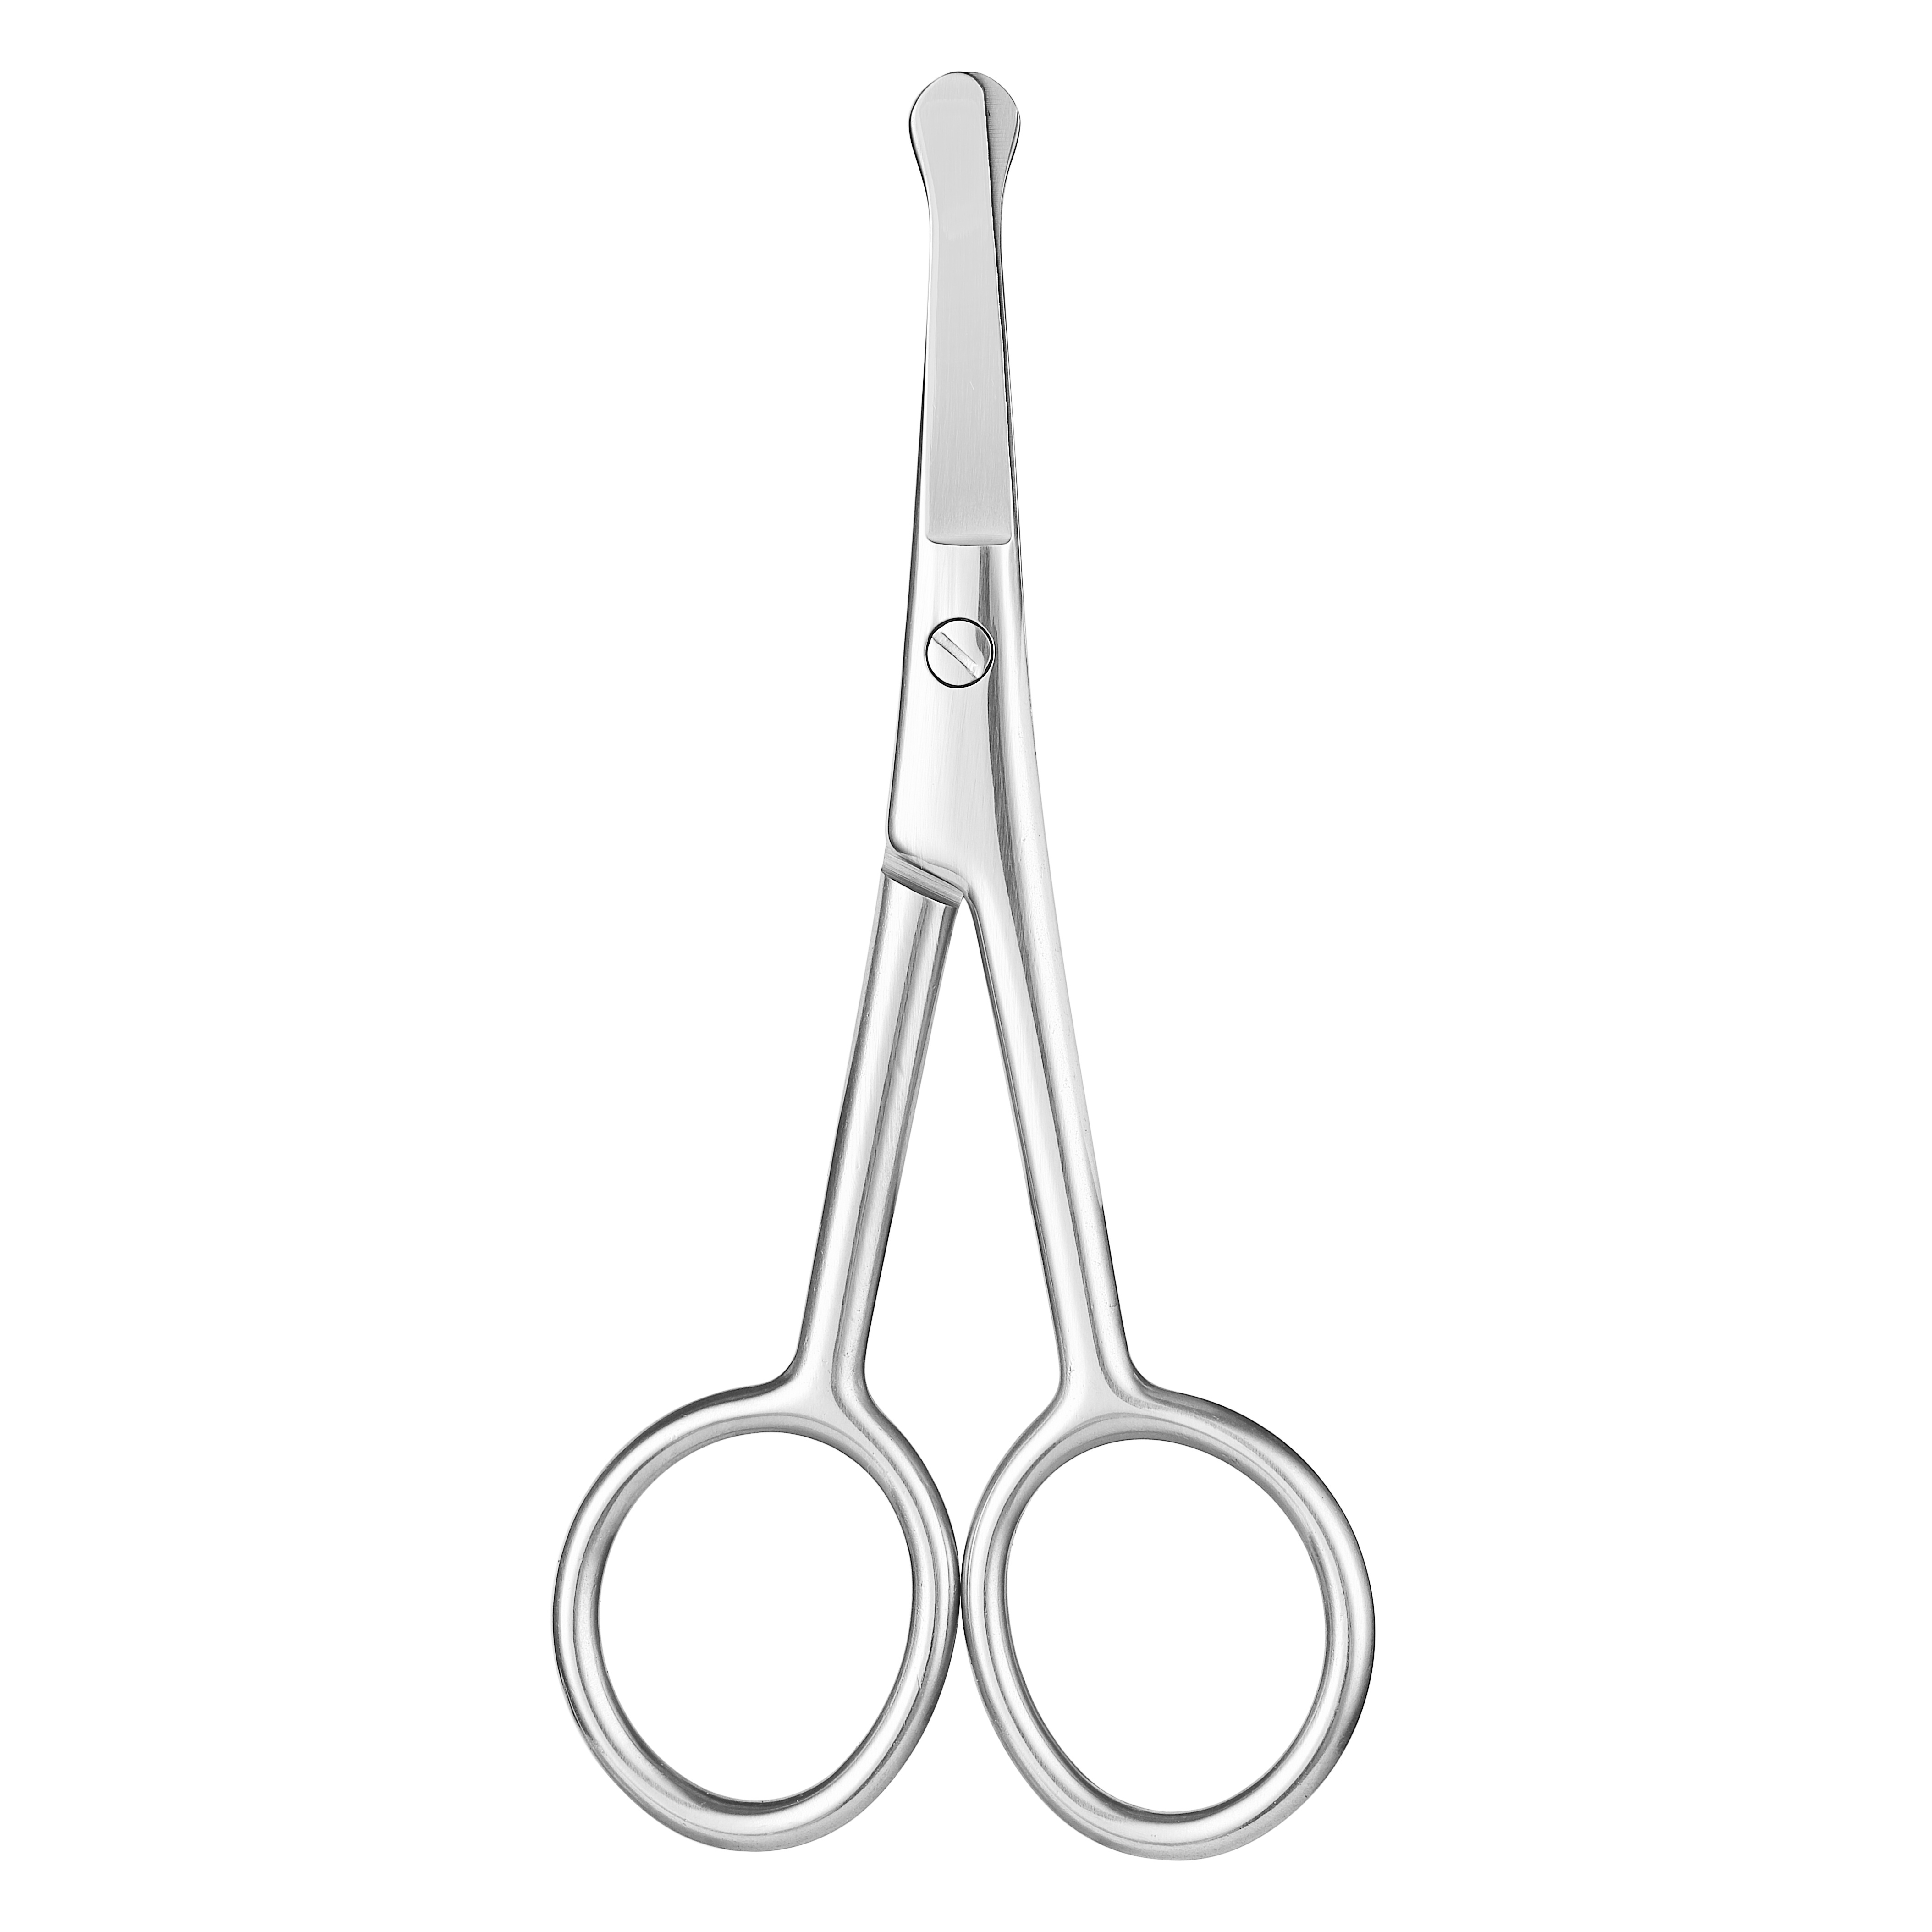 Stainless Steel Beauty Scissors Round Head Nose Hair Scissors High-end  Eyebrow Scissors Beauty Scissors Set